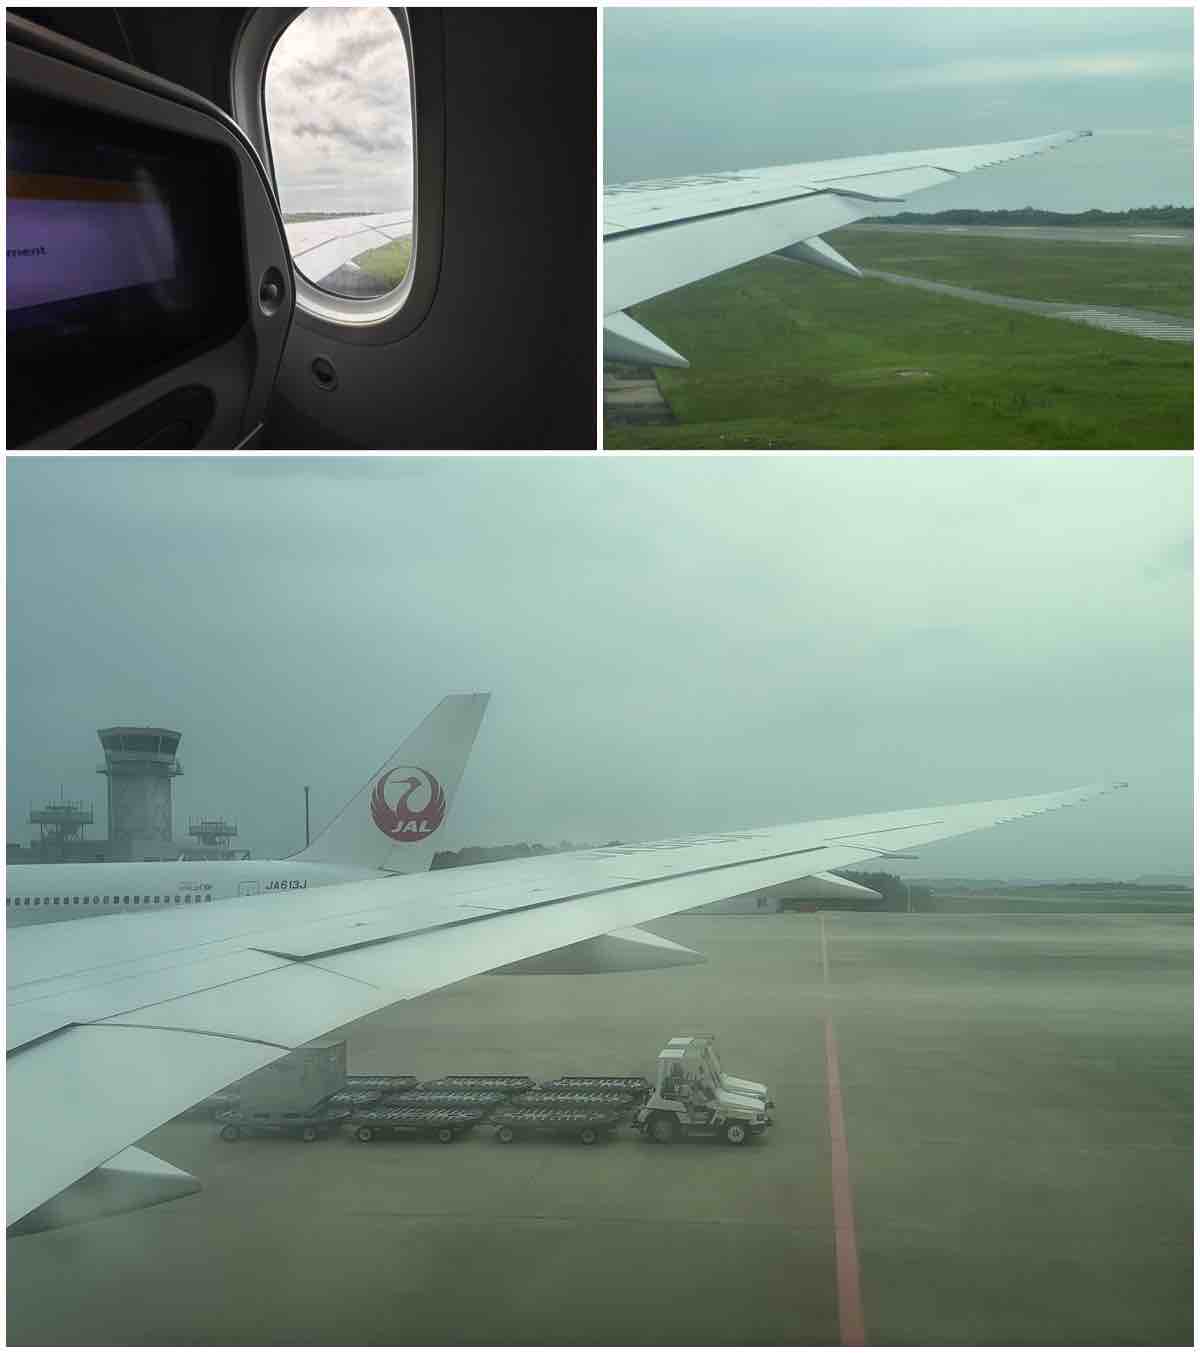 ANA 787-8 taxi into the gate Hiroshima airport